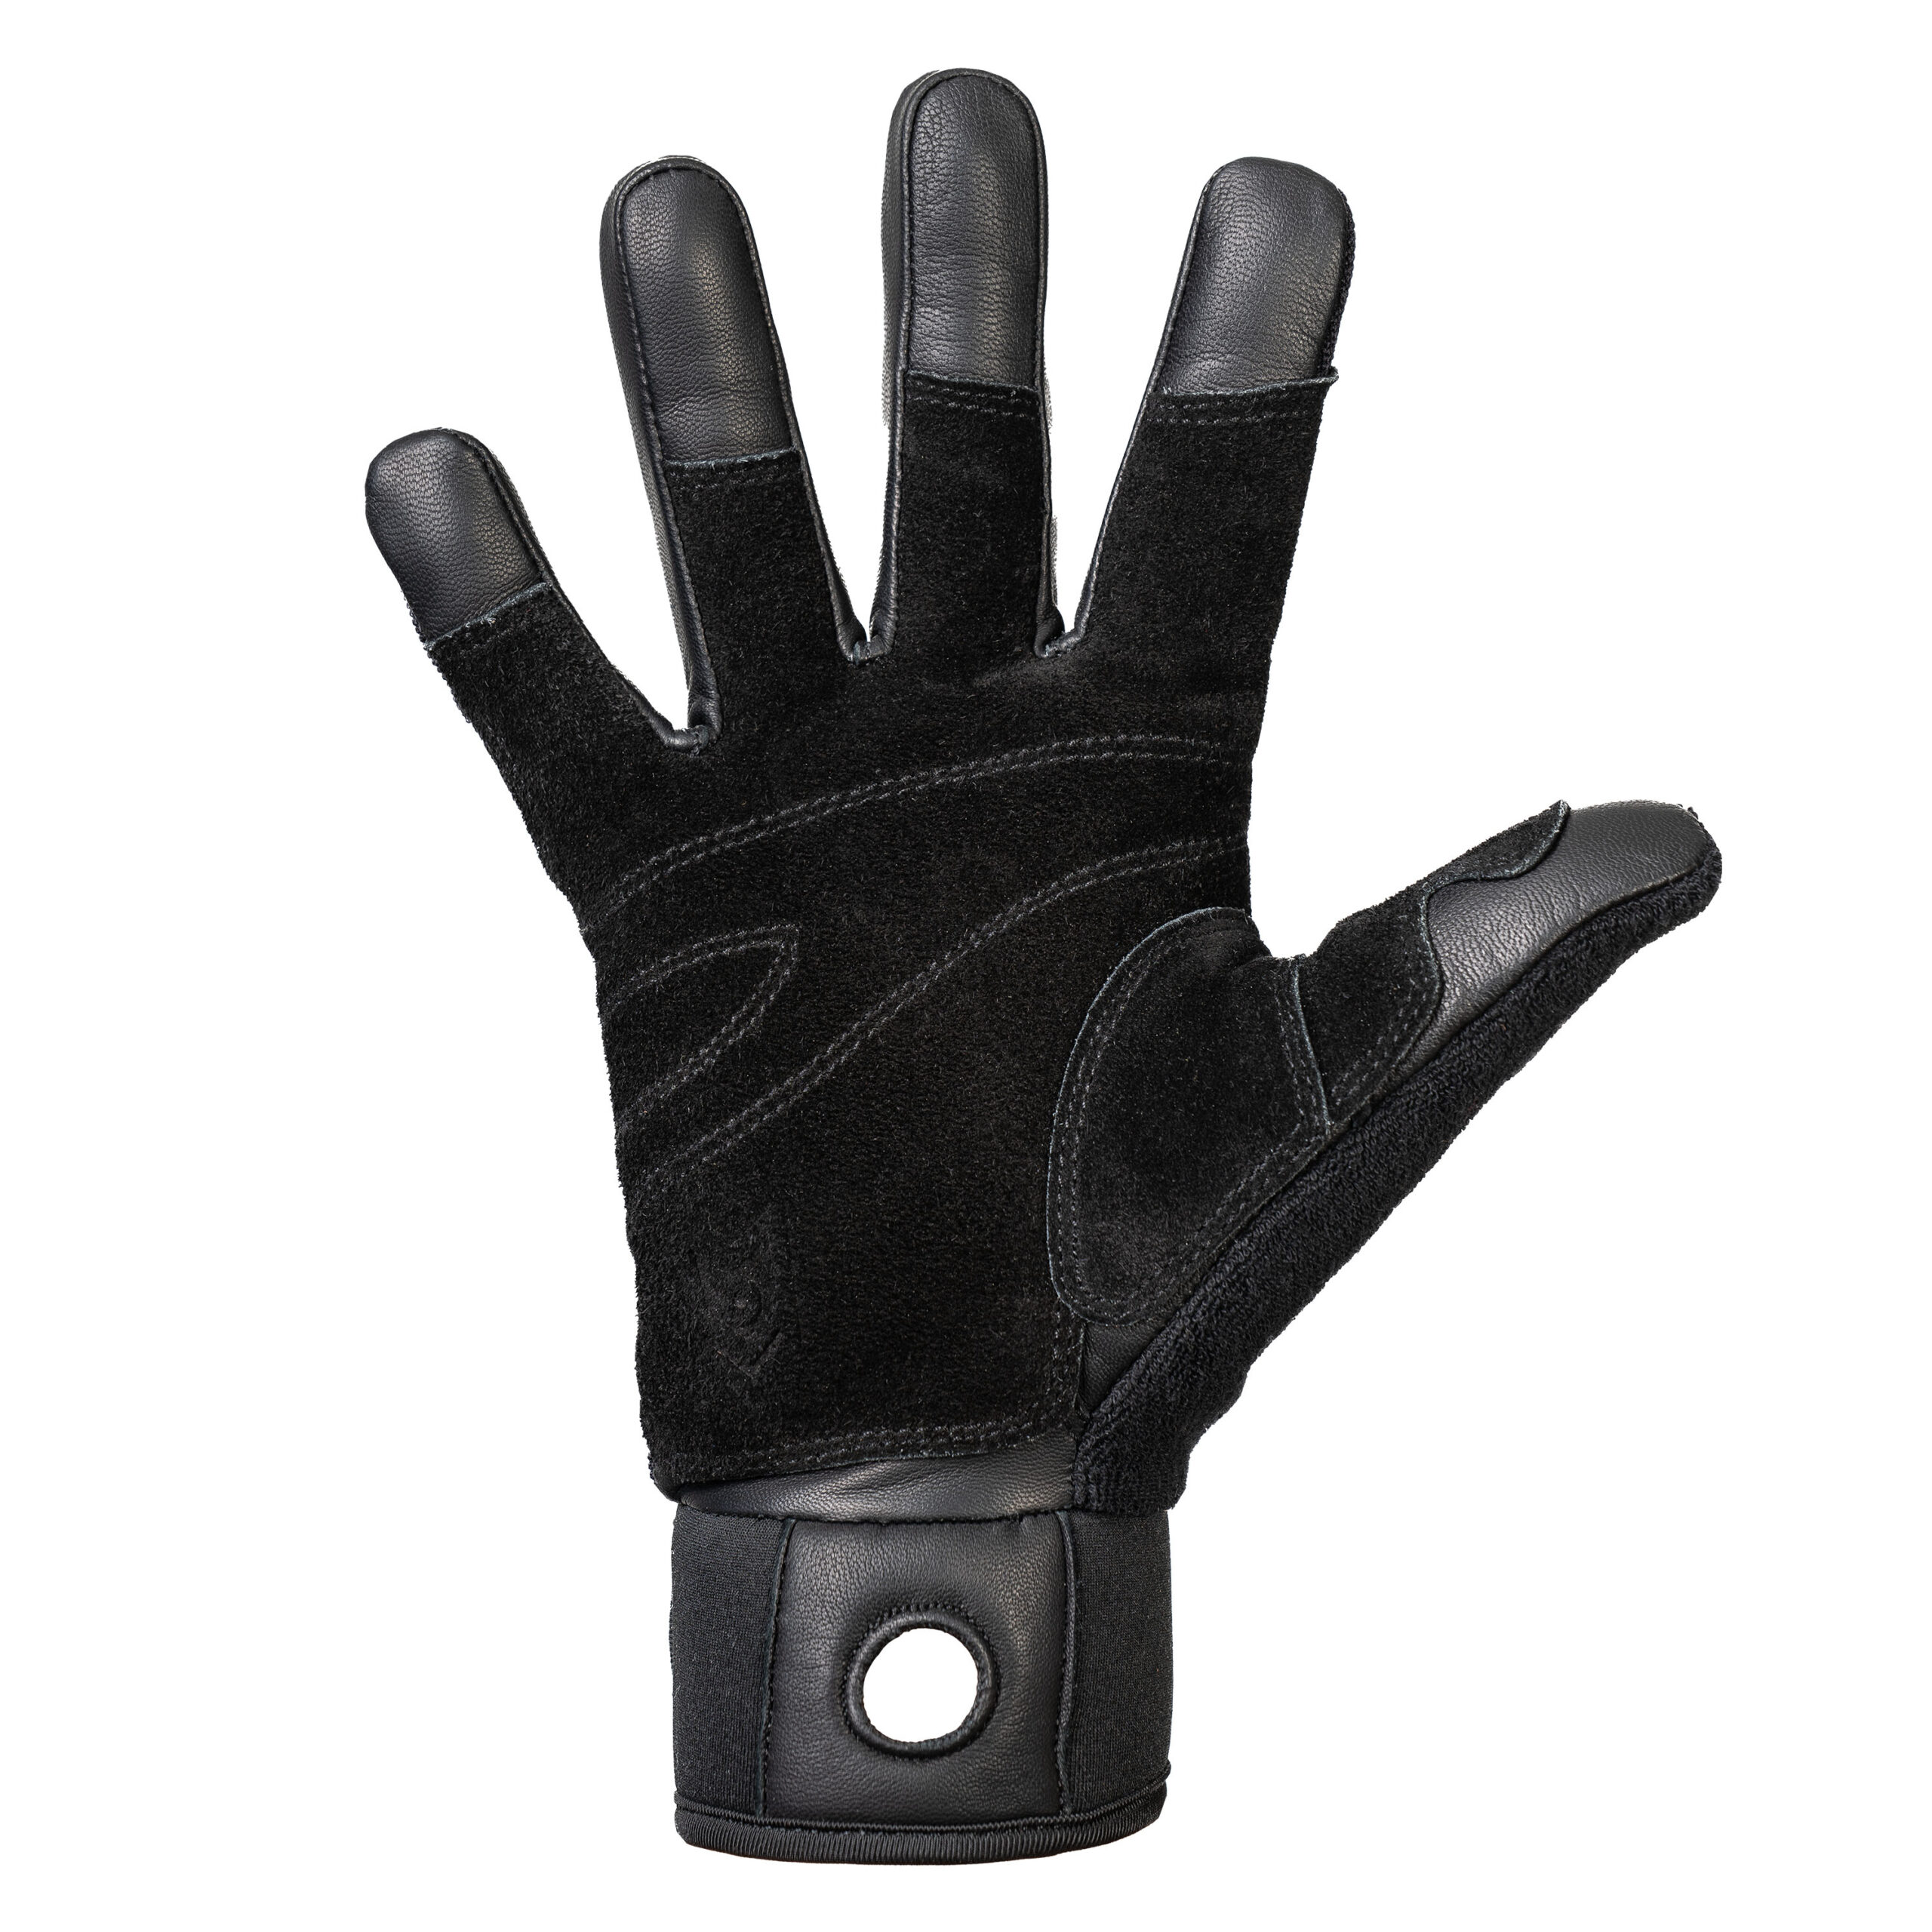 MoG Abseil/Rappel glove